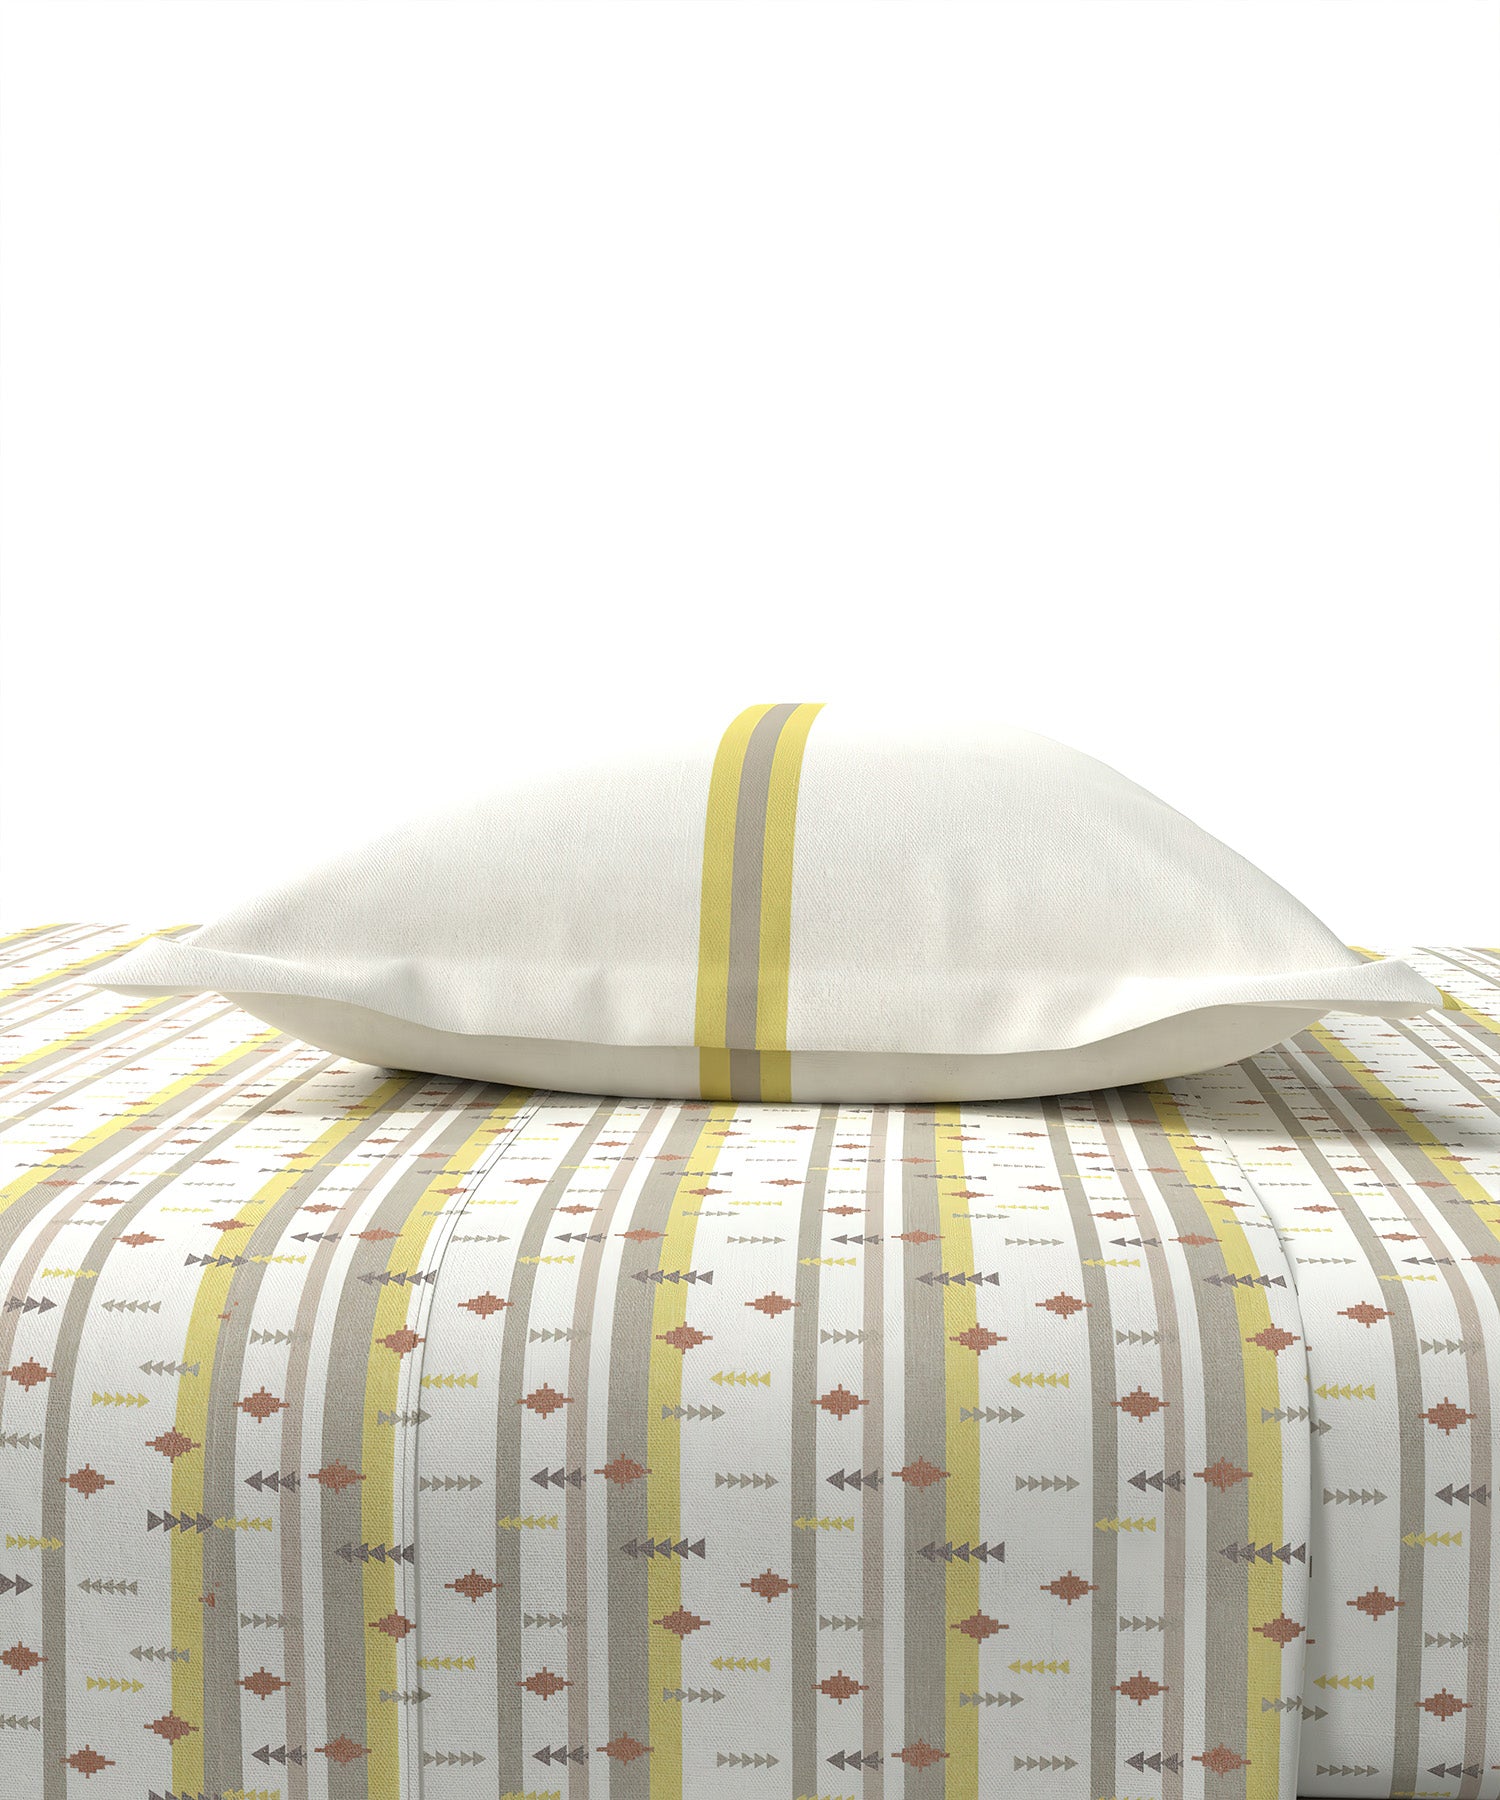 Single Size Bedsheet ₹764